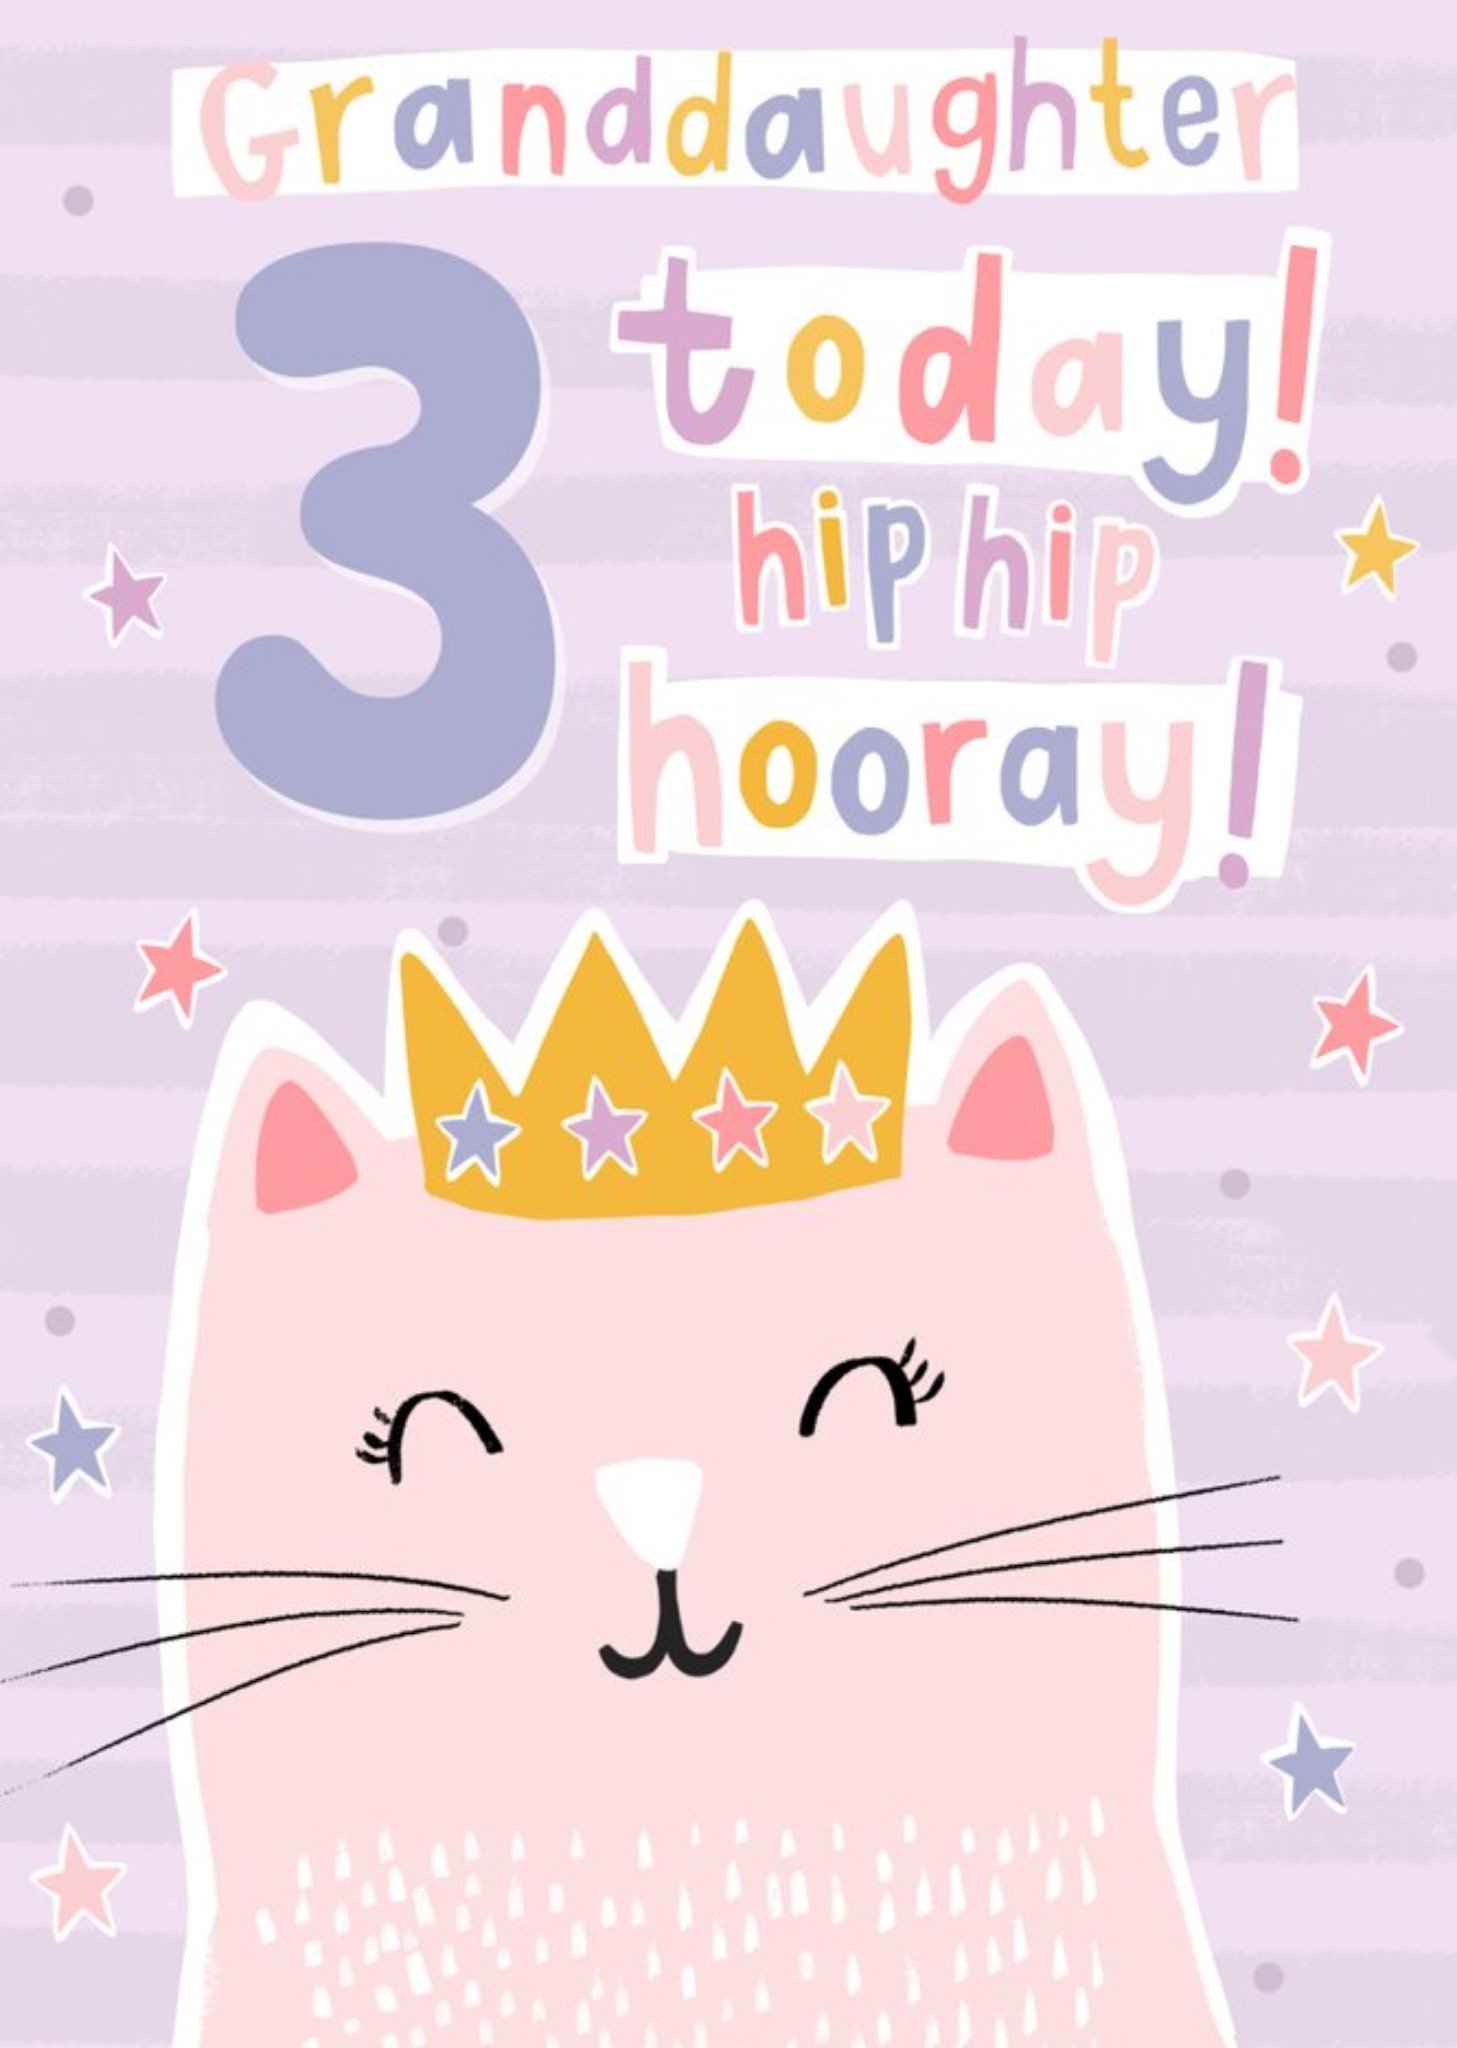 Moonpig Granddaughter 3 Today Hip Hip Hooray Birthday Card, Large